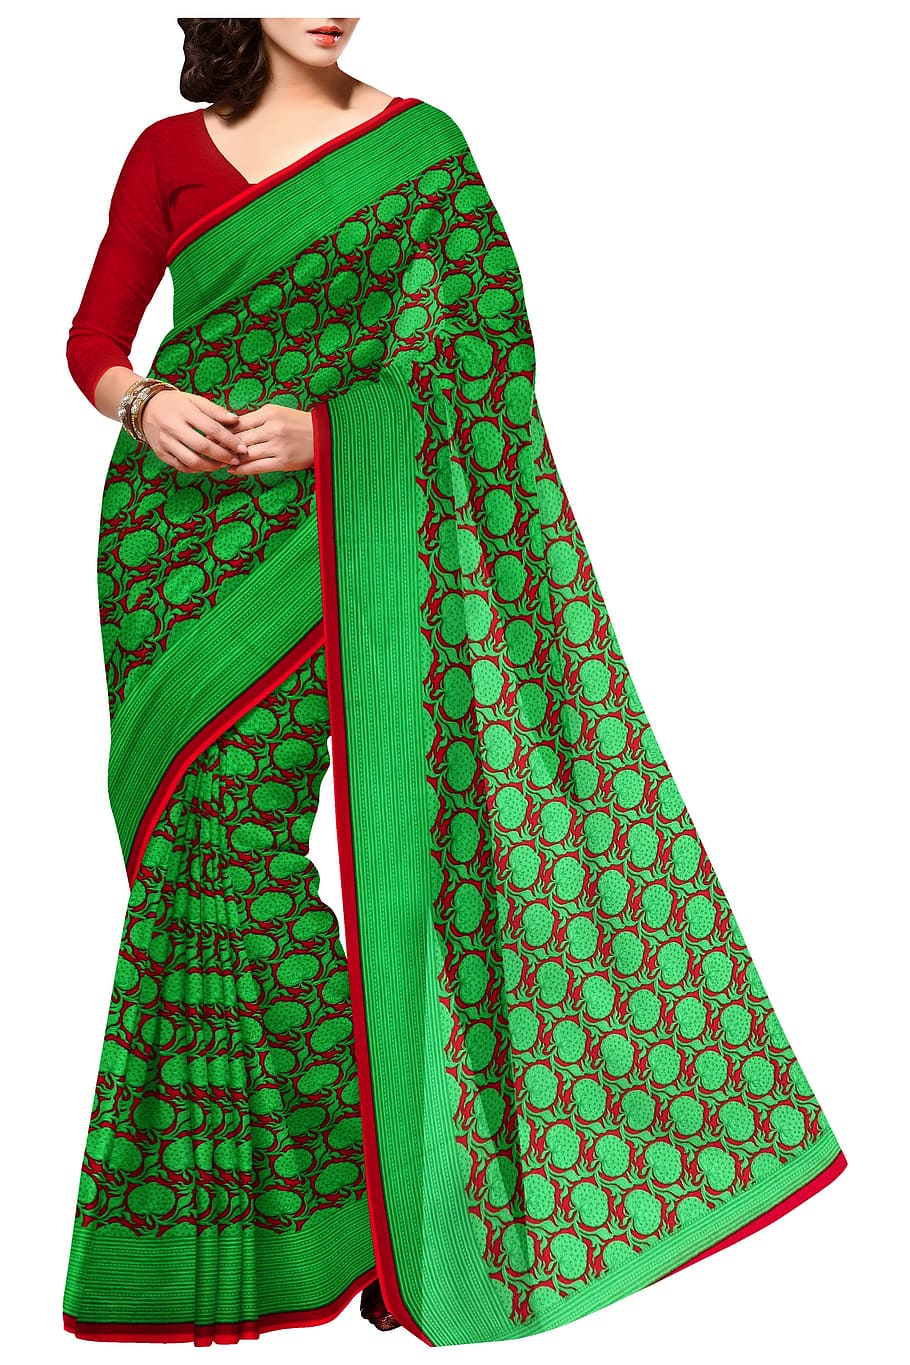 HD wallpaper: saree, indian, ethnic, clothing, fashion, silk, dress, woman  | Wallpaper Flare